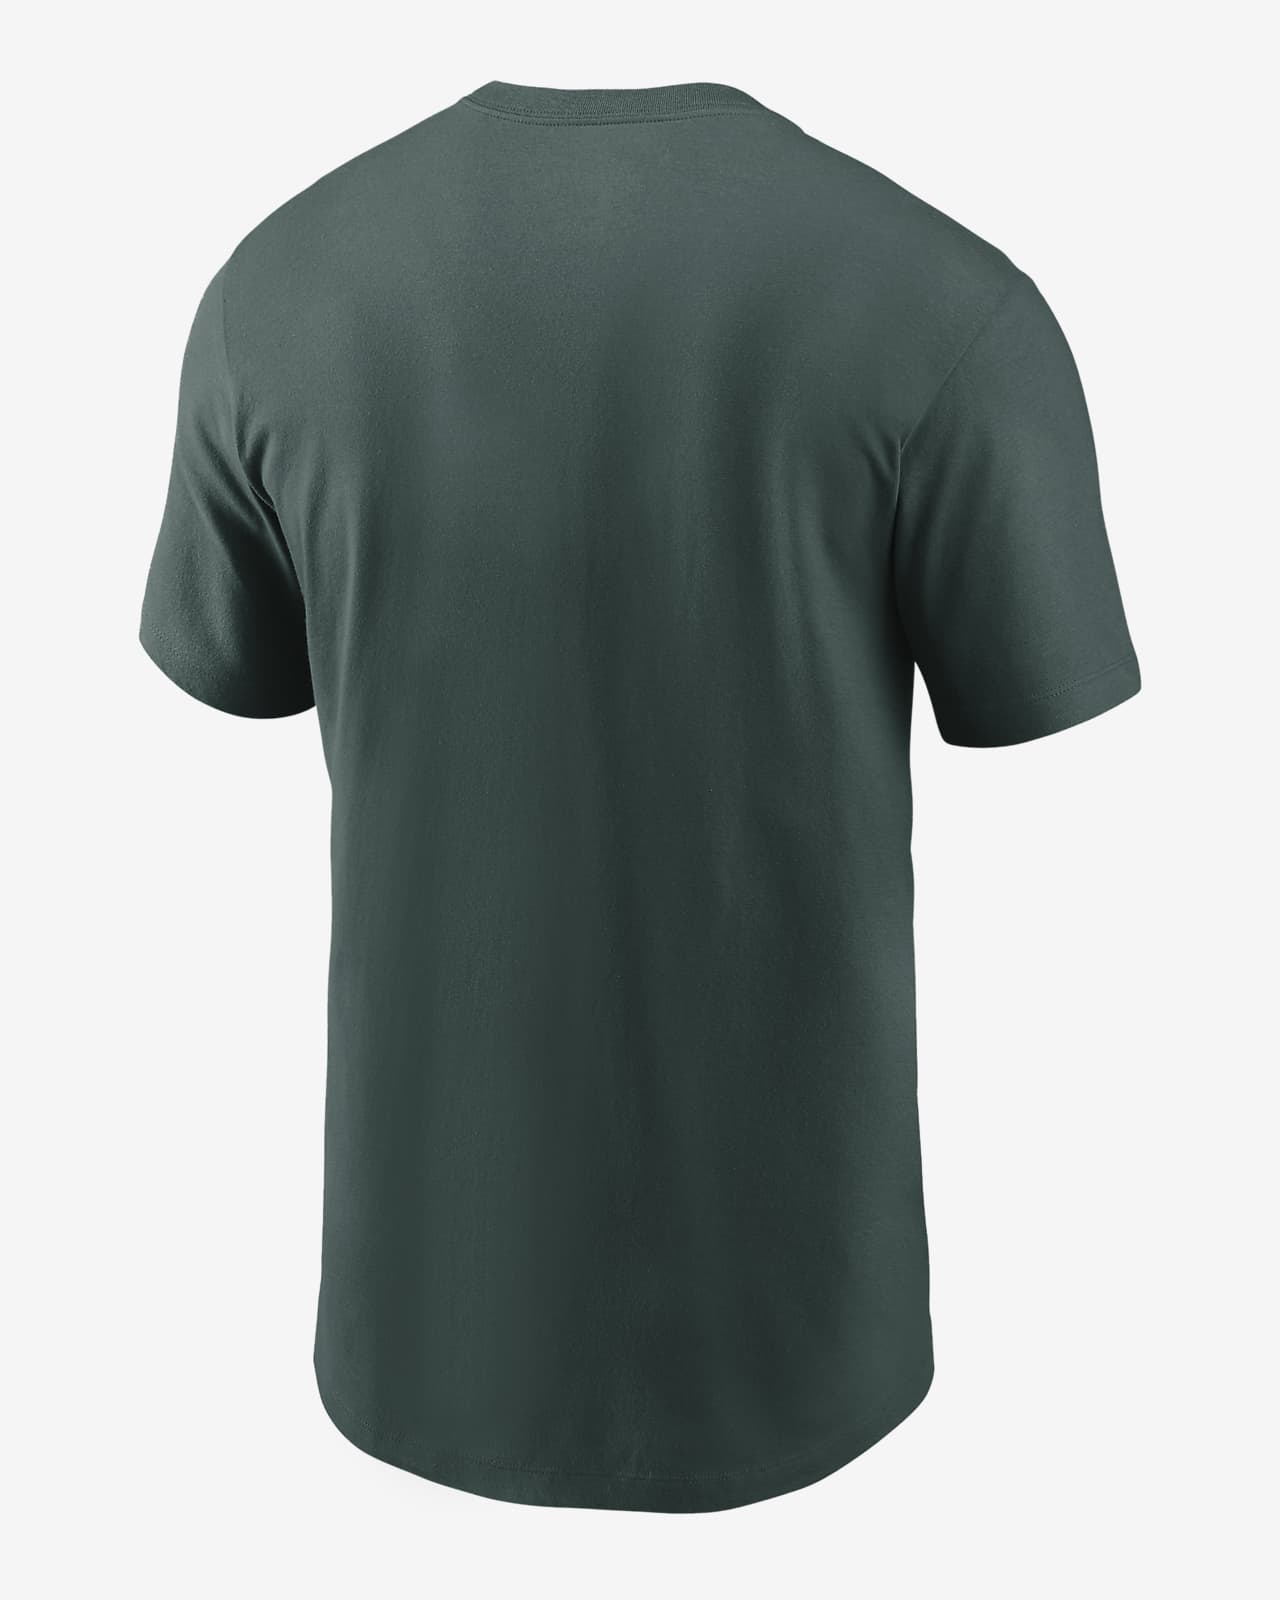 Colorado Rockies City Connect Wordmark Men's Nike MLB T-Shirt